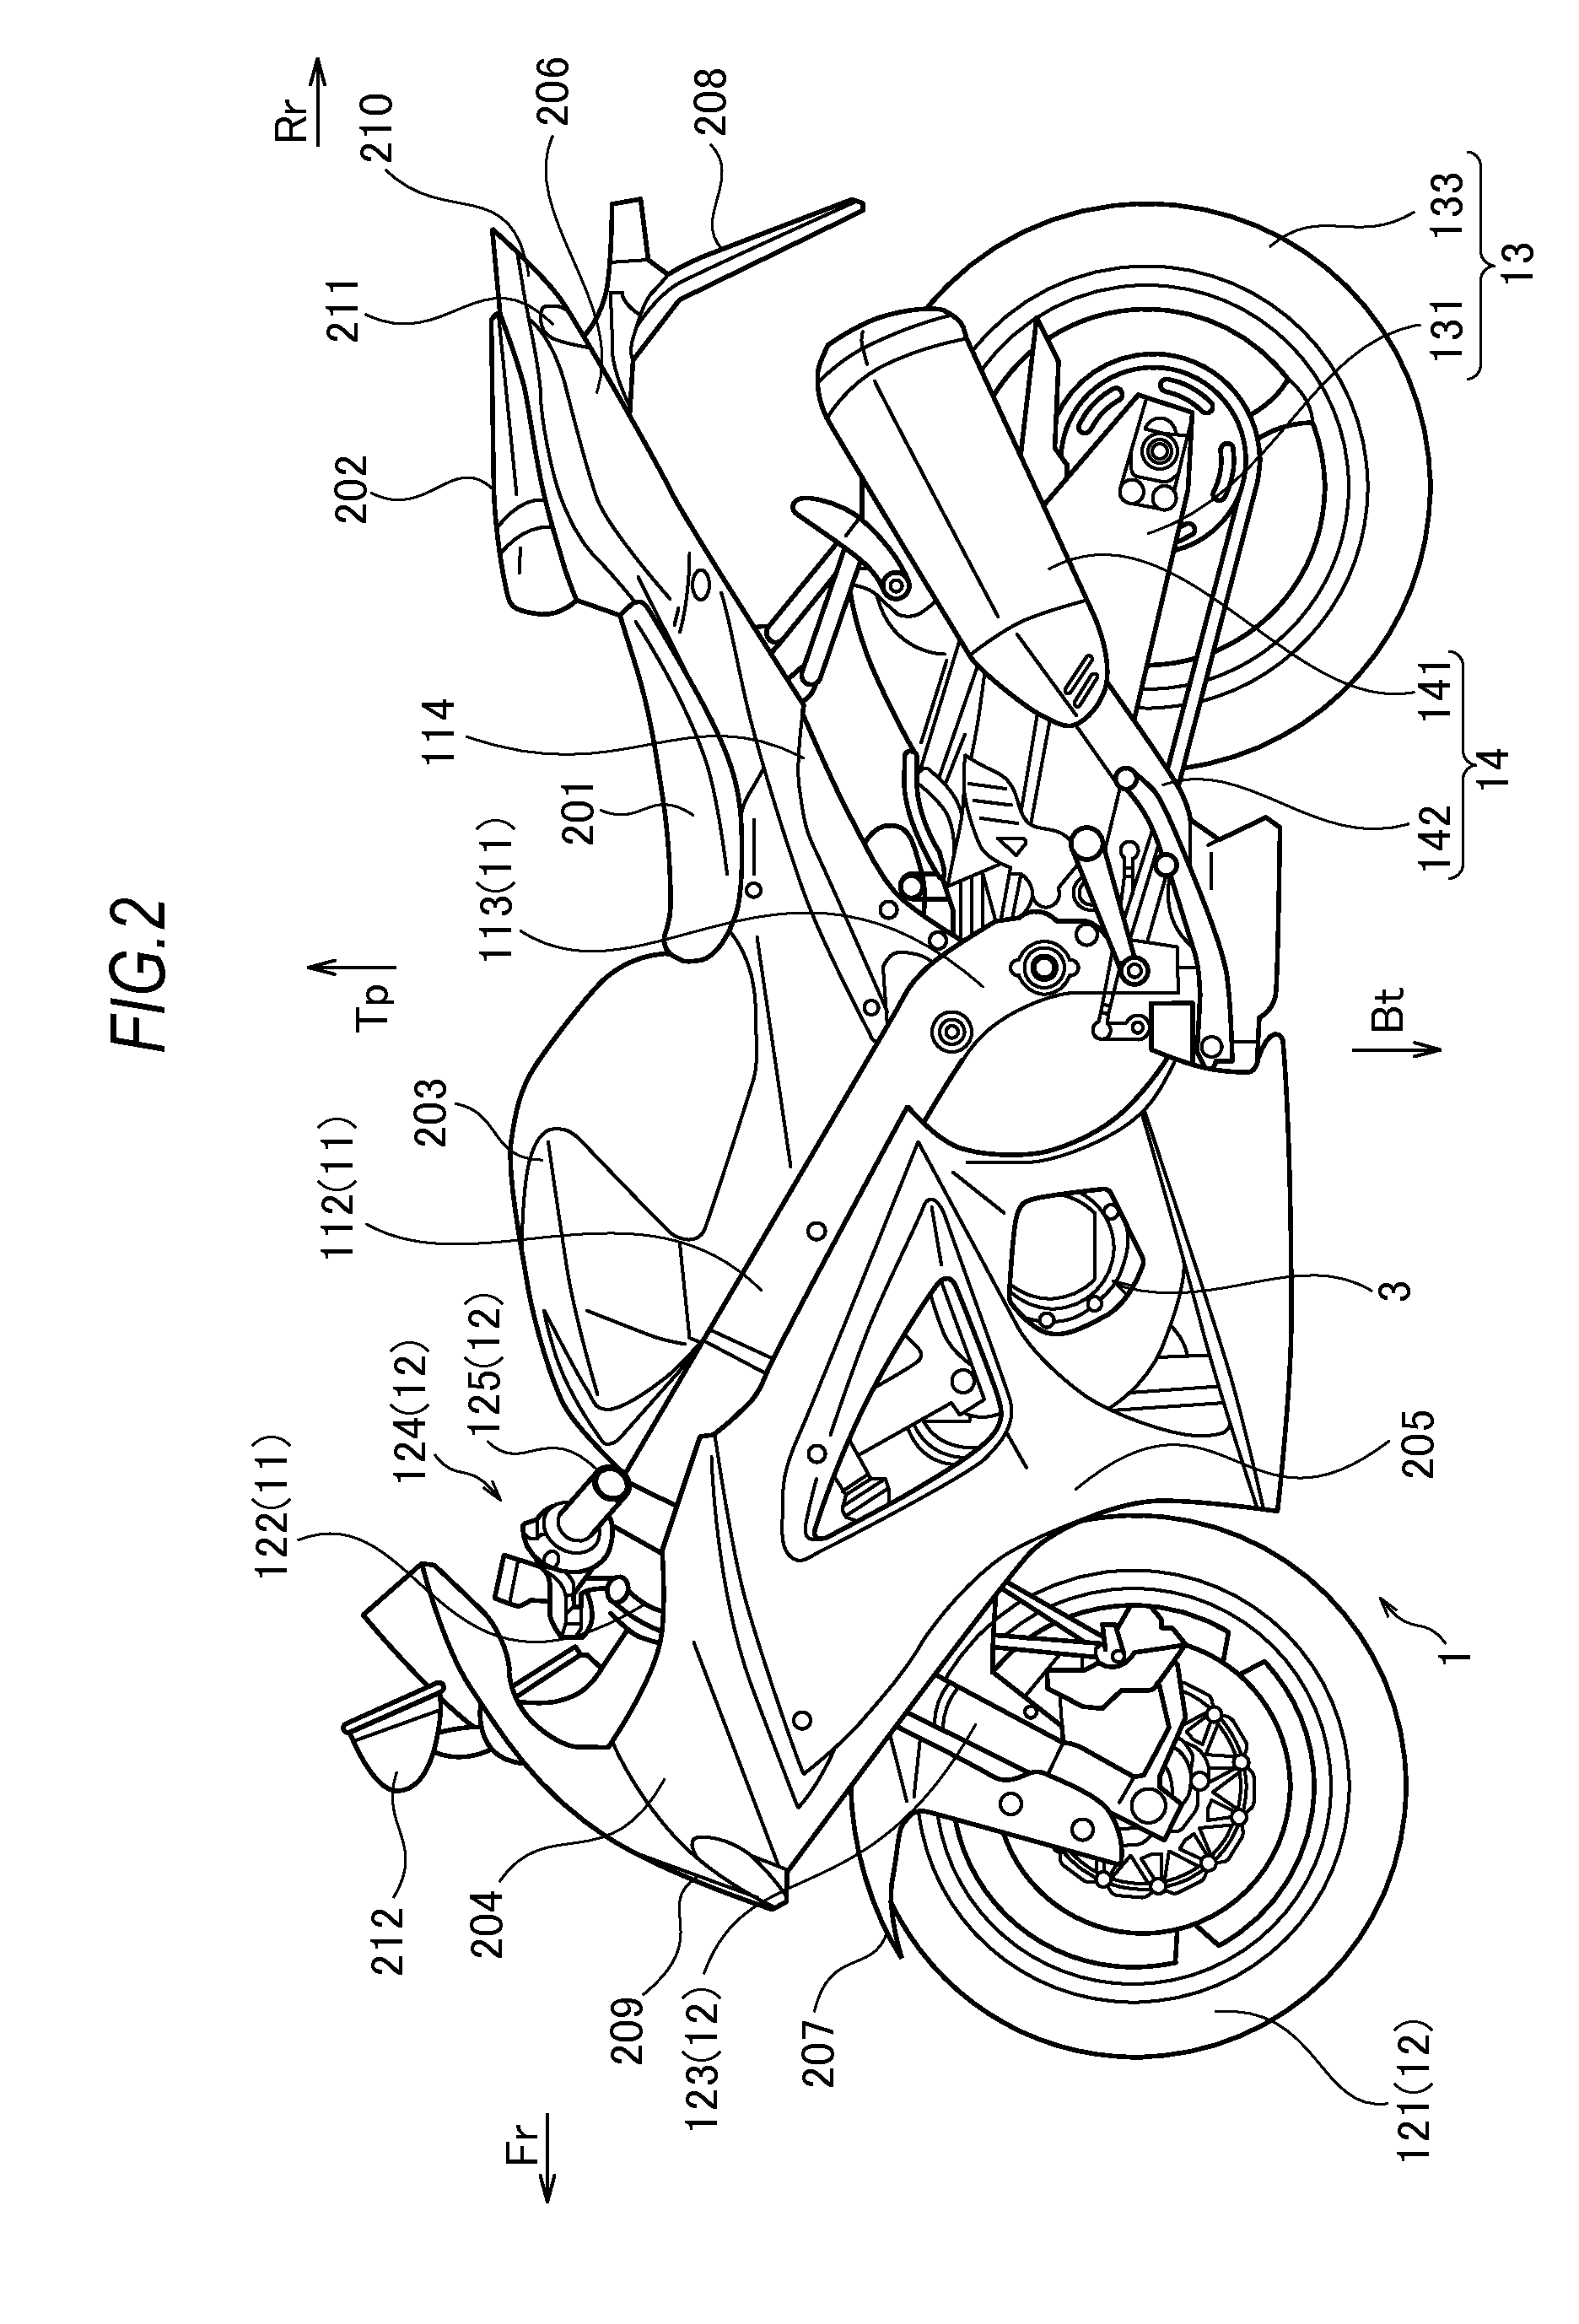 Engine unit of motorcycle